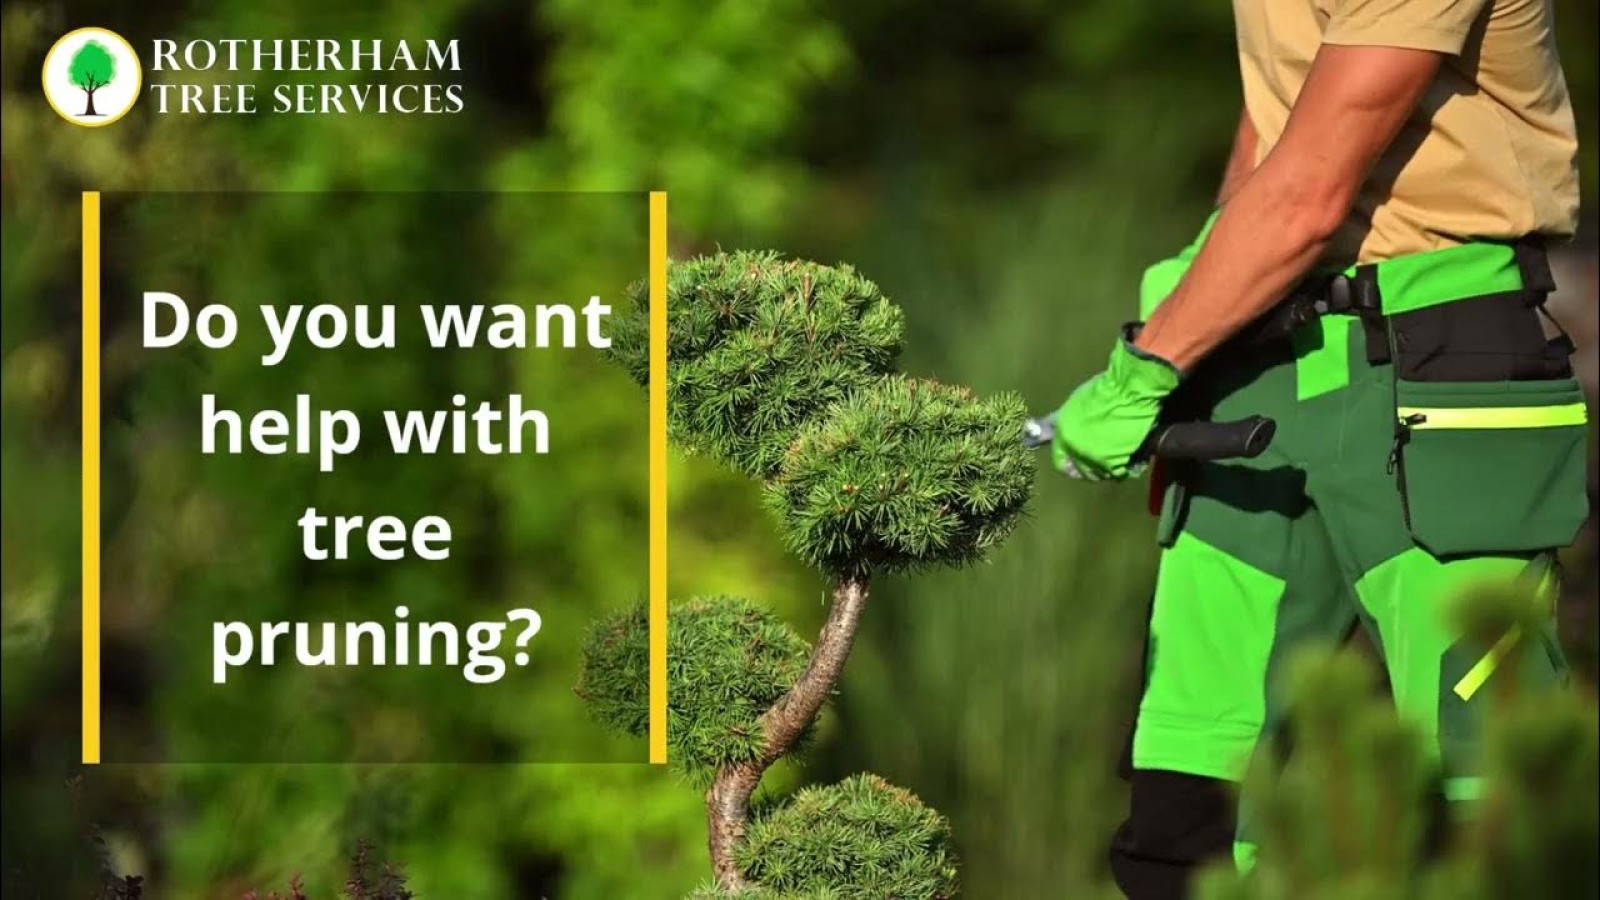 Rotherham Tree Services